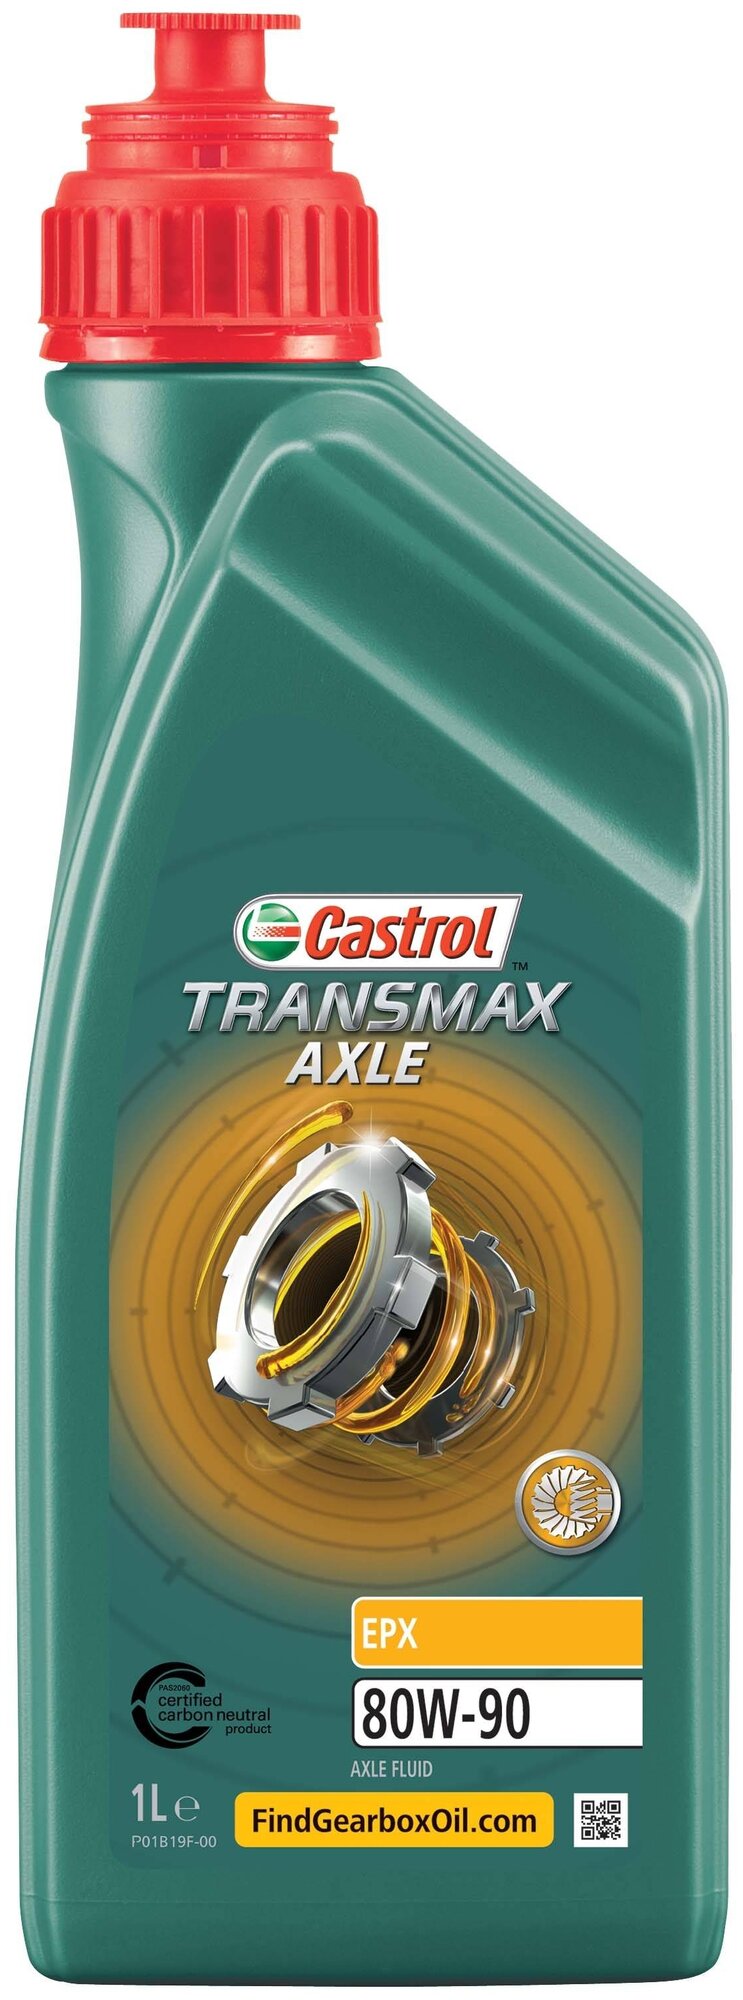 Масло трансмиссионное Castrol Transmax Axle EPX, 80W-90, 1 л, 1 шт.